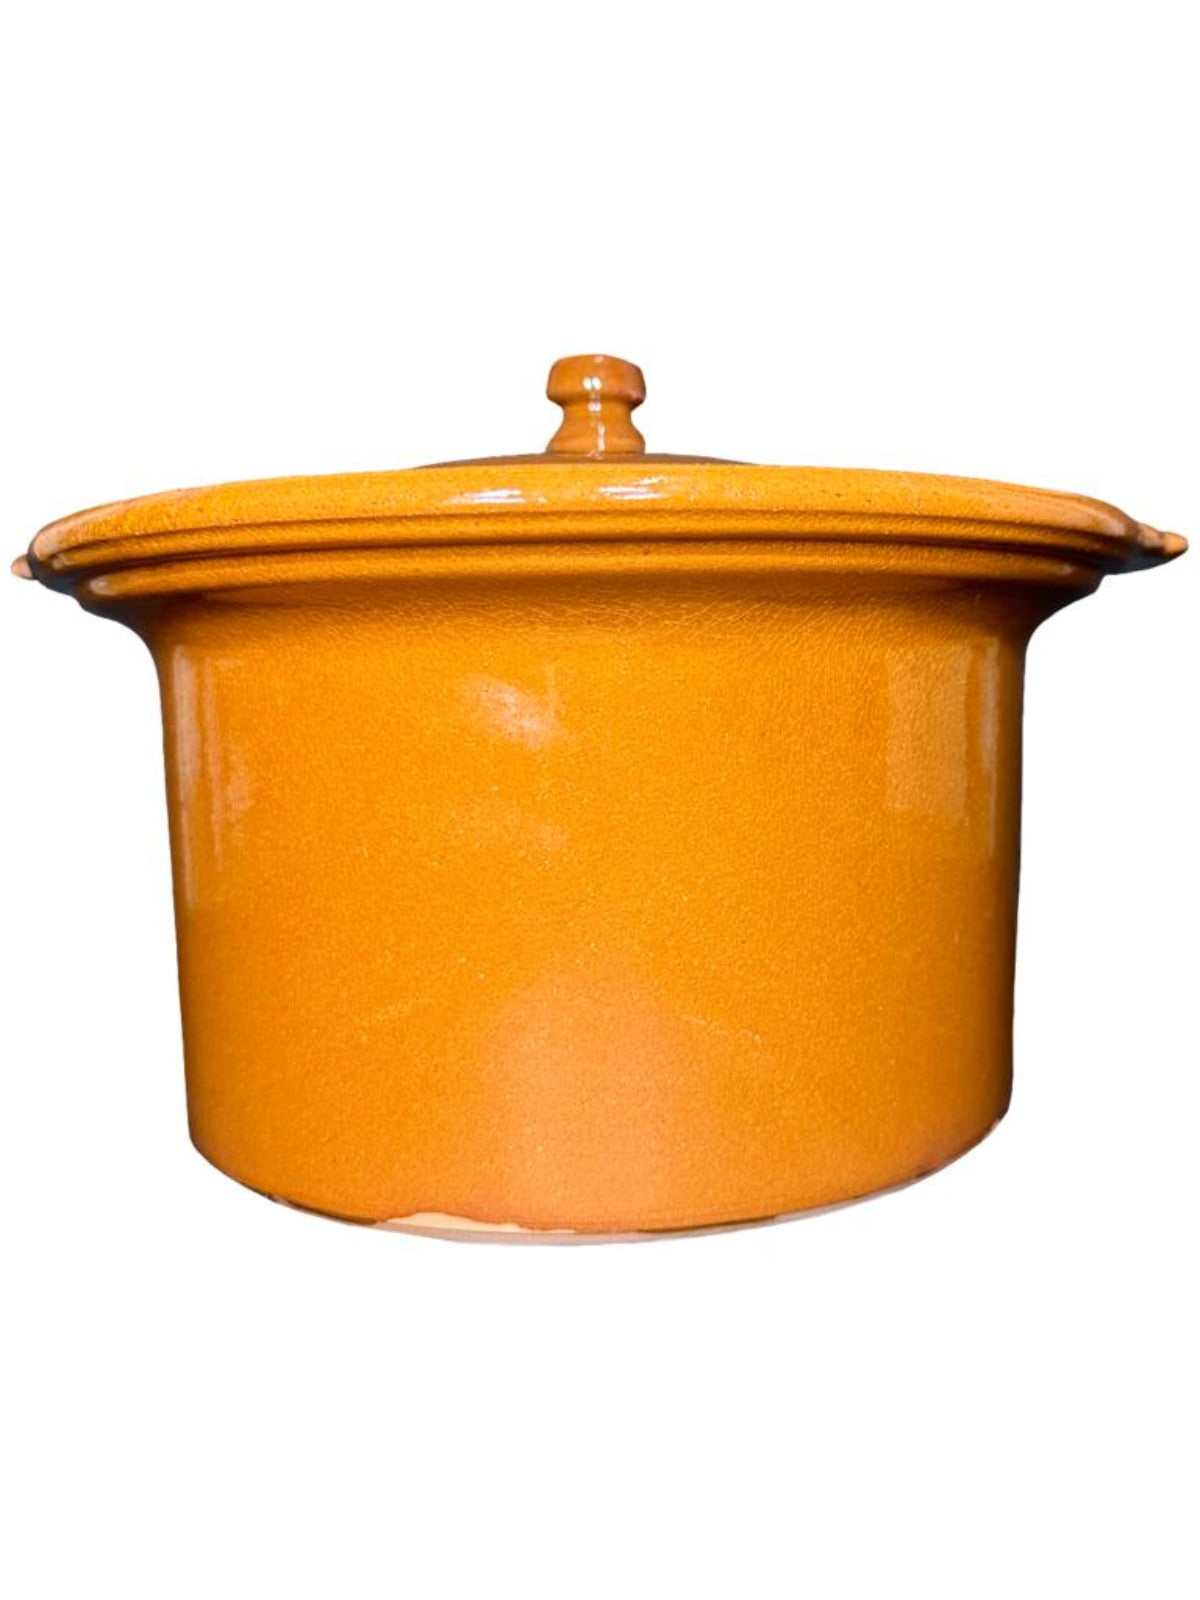 HP Padilla Olla Spanish Terracotta Cooking Pot 27cm 4L